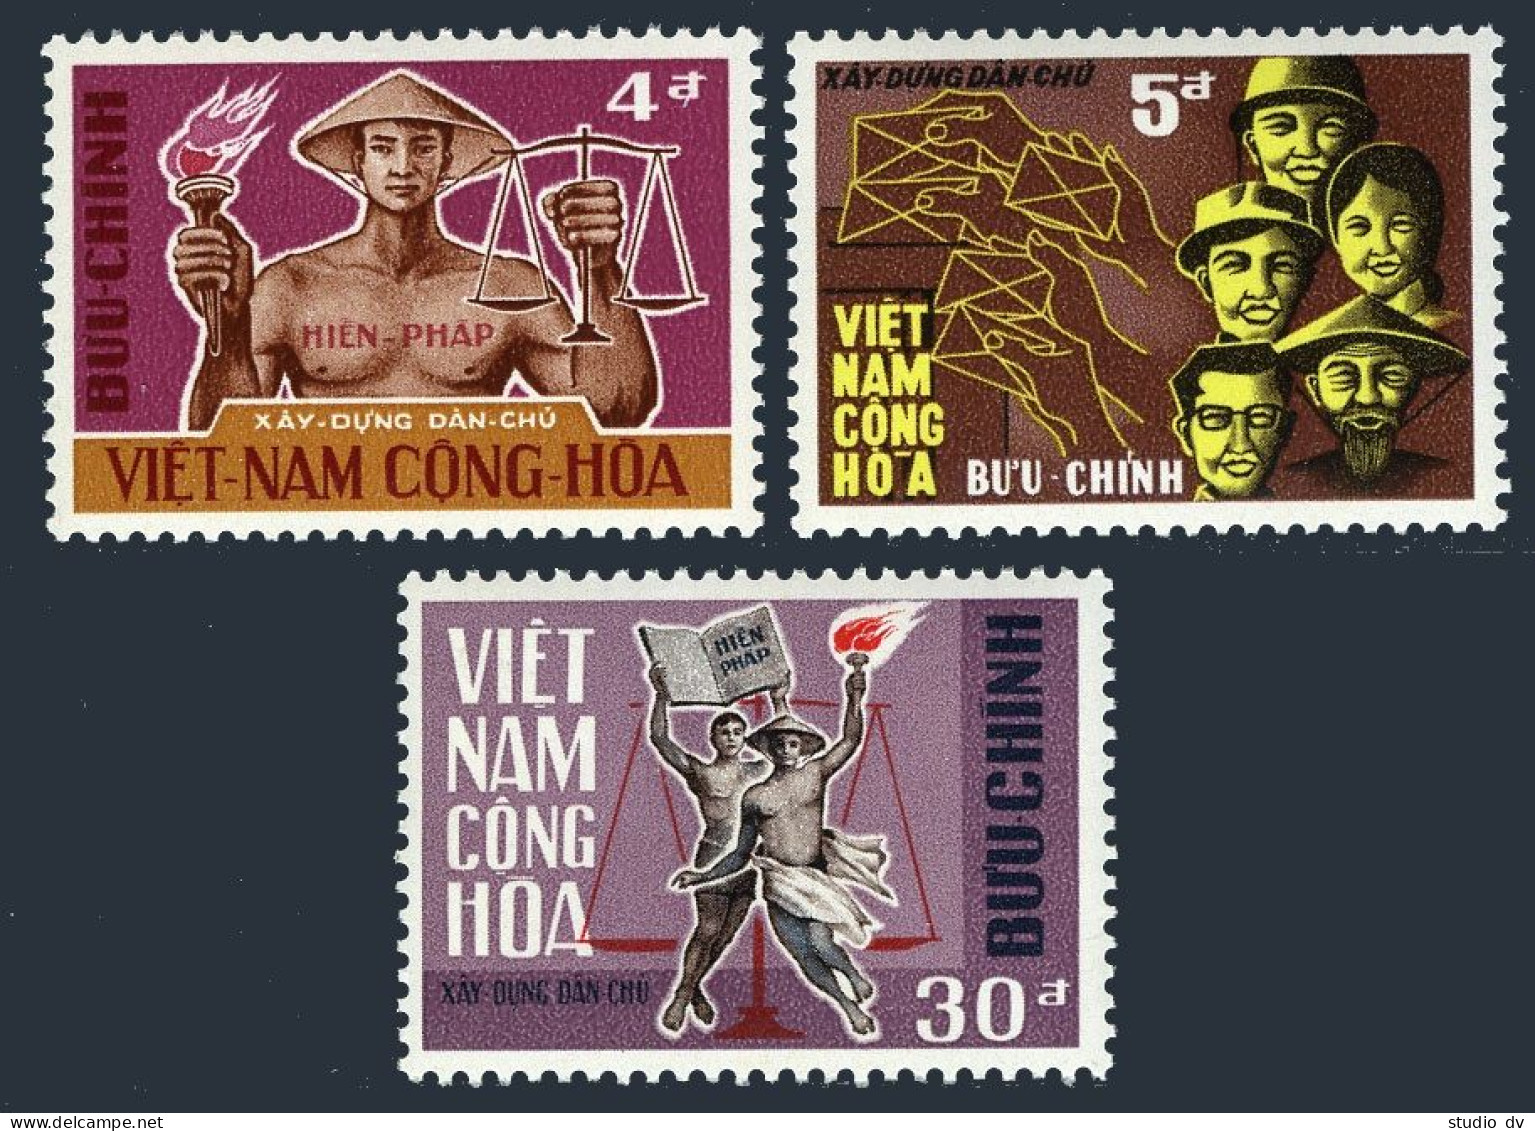 Viet Nam South 317-319, MNH. Mi 394-396. National Day 1967. General Elections. - Viêt-Nam